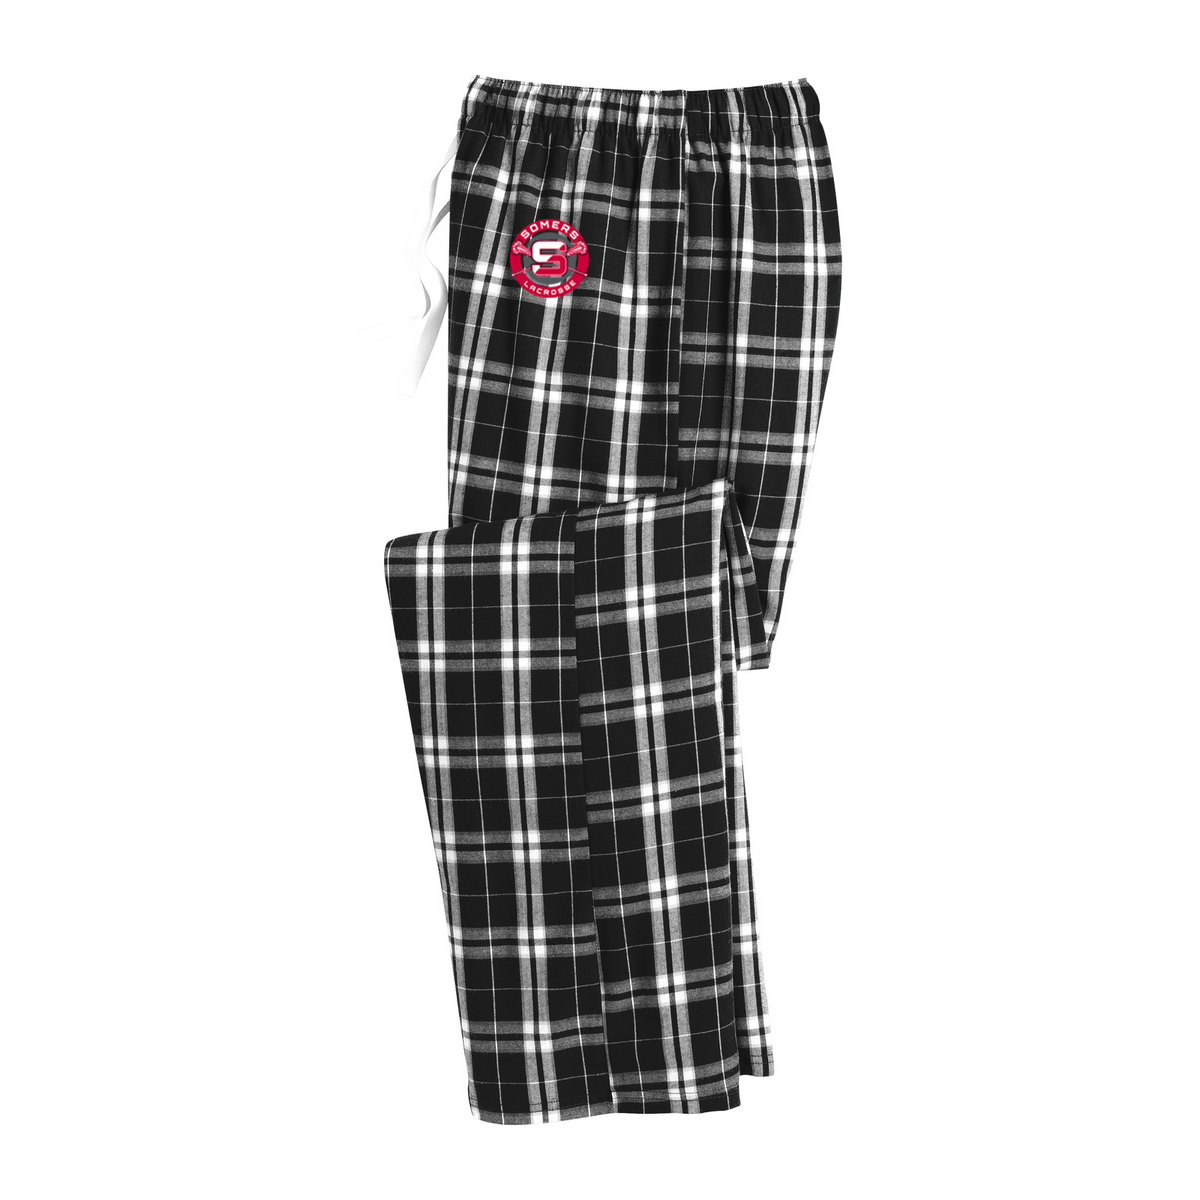 Somers Girls Lacrosse Plaid Pajama Pants